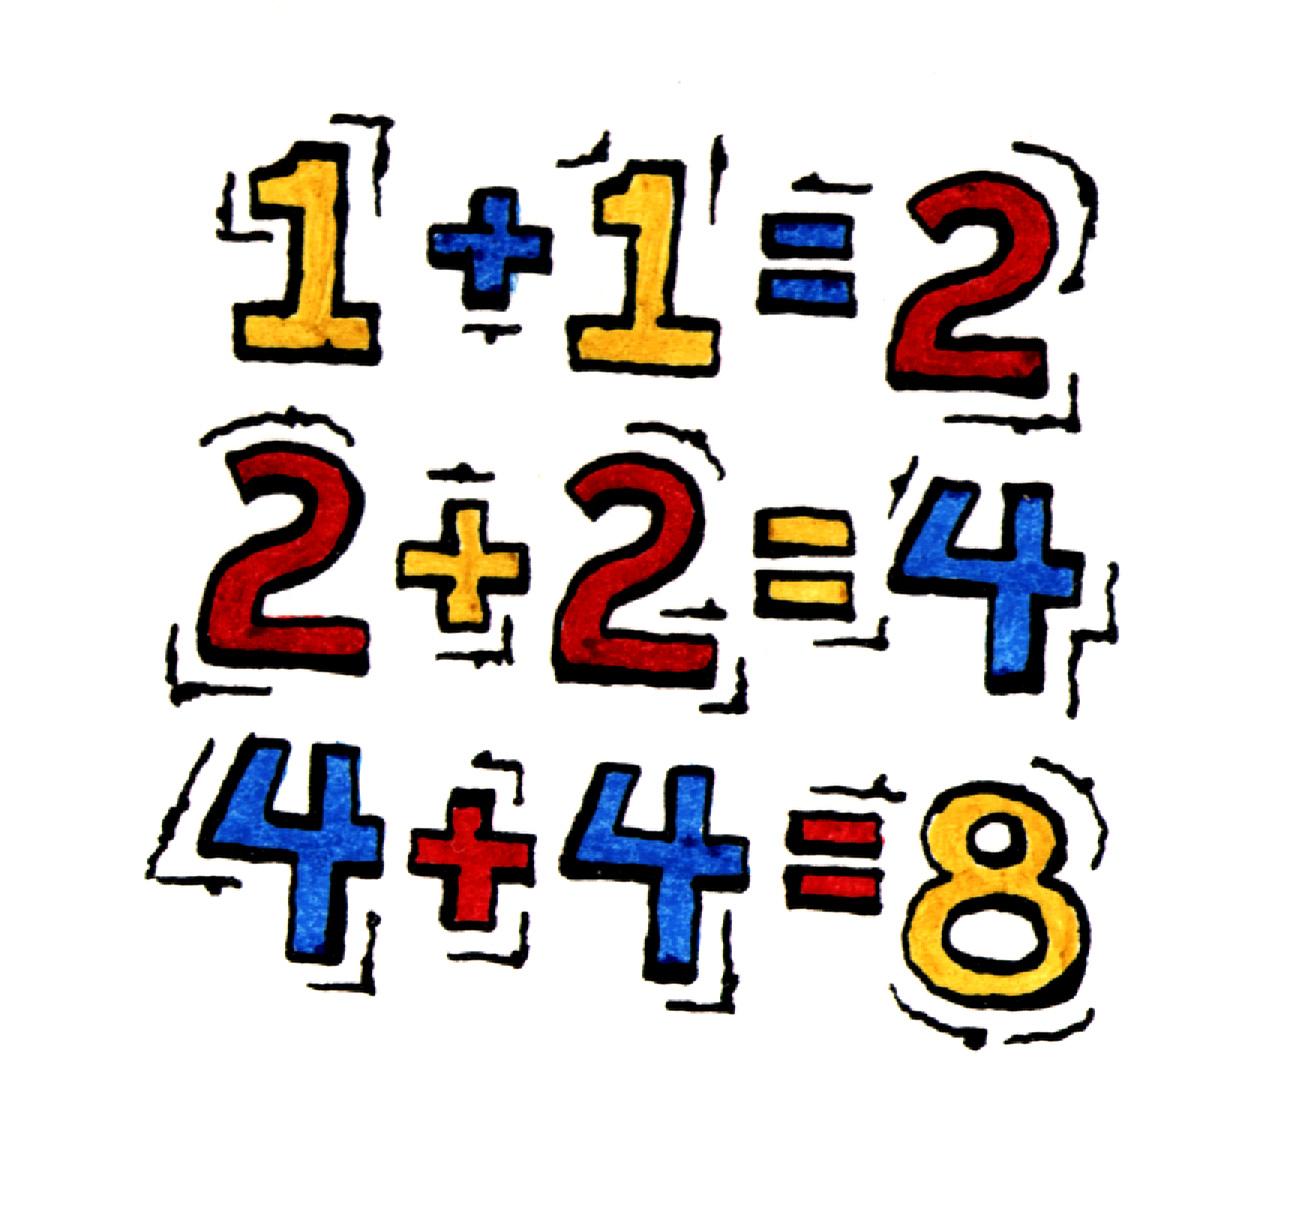 maths images free clip art - photo #29